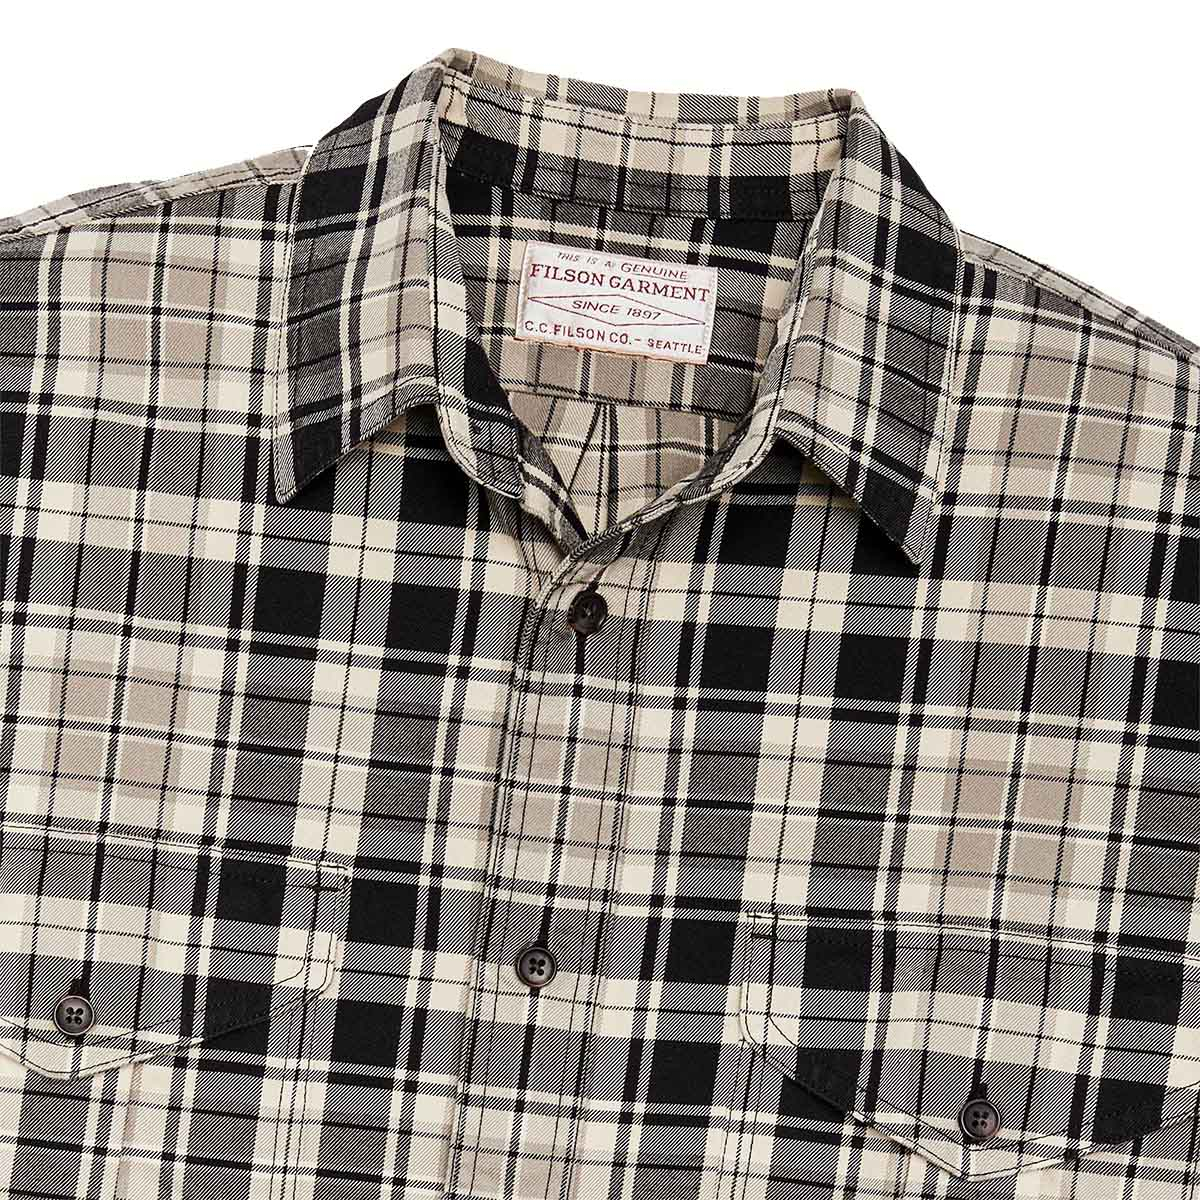 Filson Lightweight Alaskan Guide Shirt Cream/Black/Gray/Plaid, setting the standard for year-round versatility and comfort in an outdoor shirt